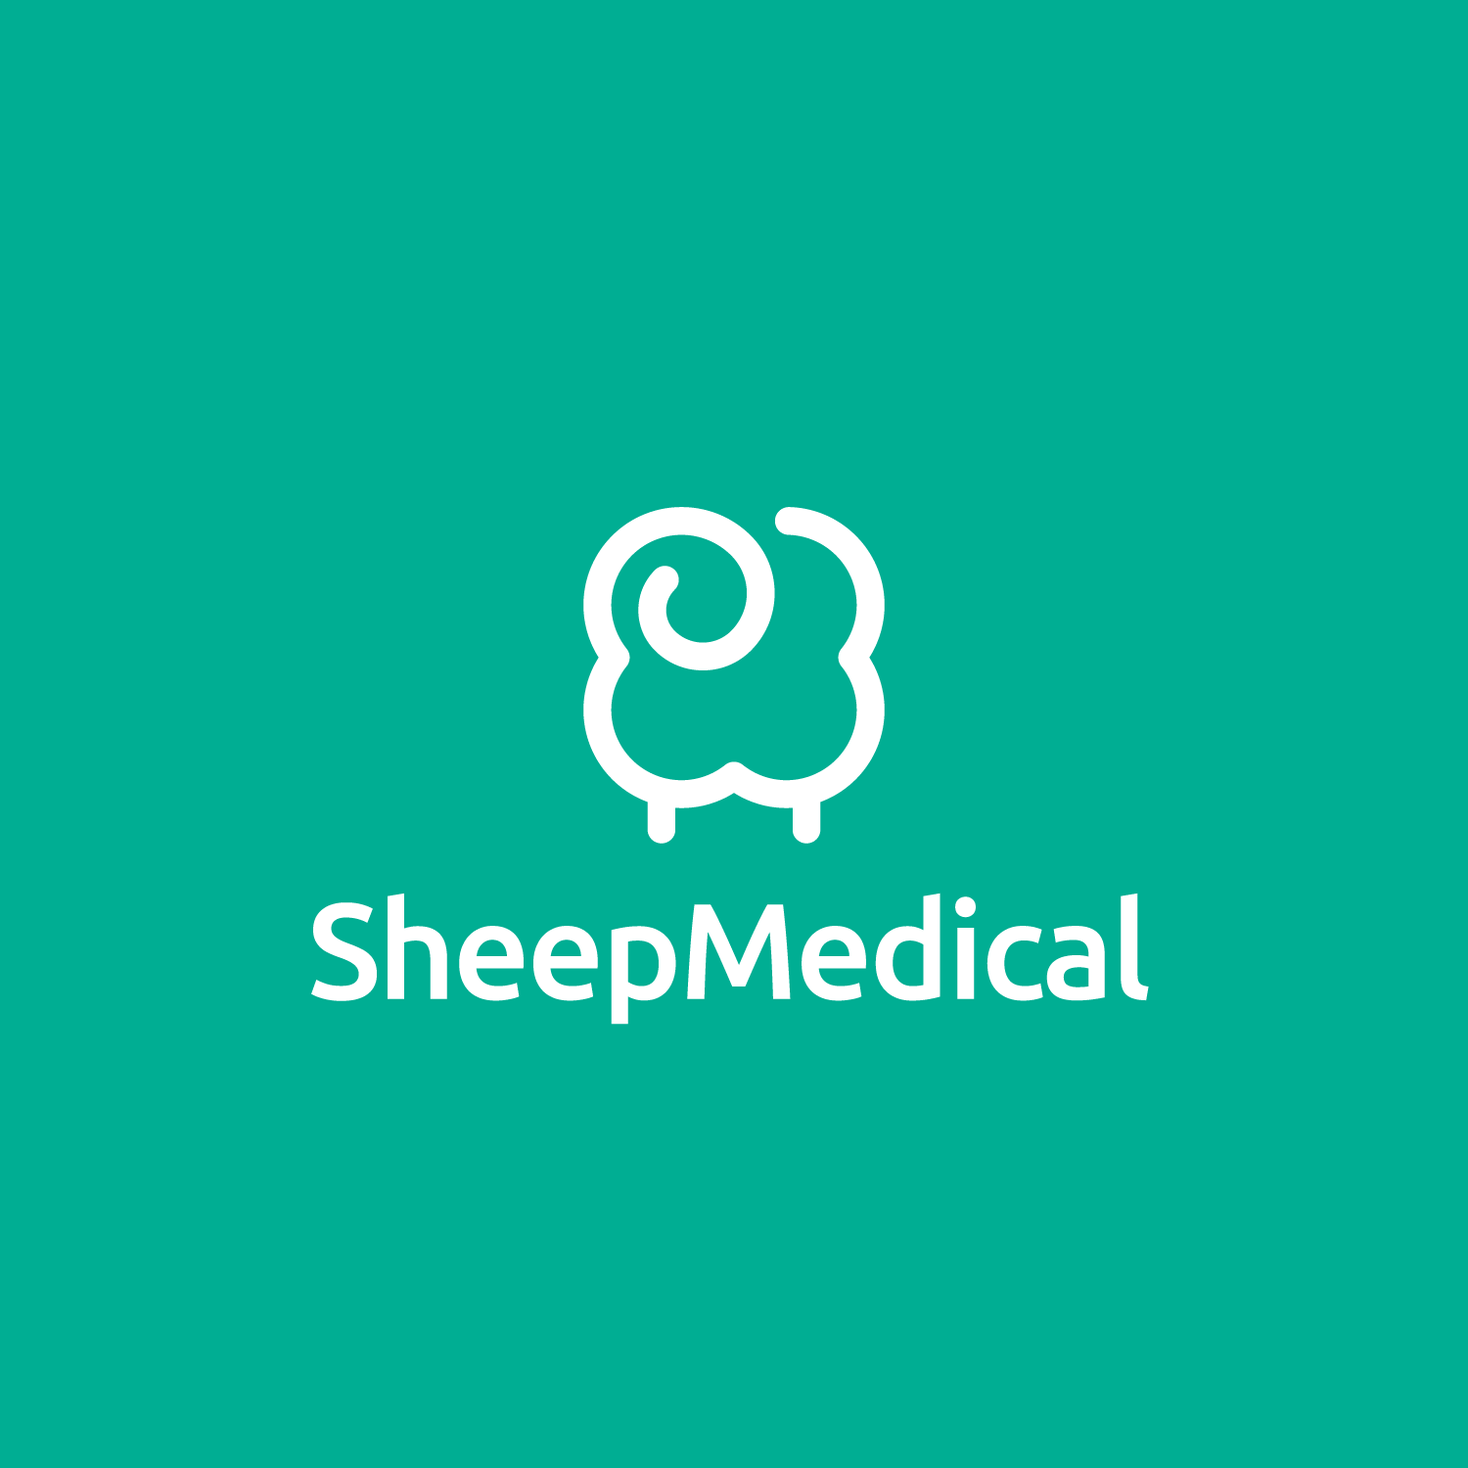 SheepMedicalは、ＳＤＧｓの目標達成に向けた貢献が期待できるとし、三井住友銀行より 「ＳＤＧｓ推進融資」を受けました